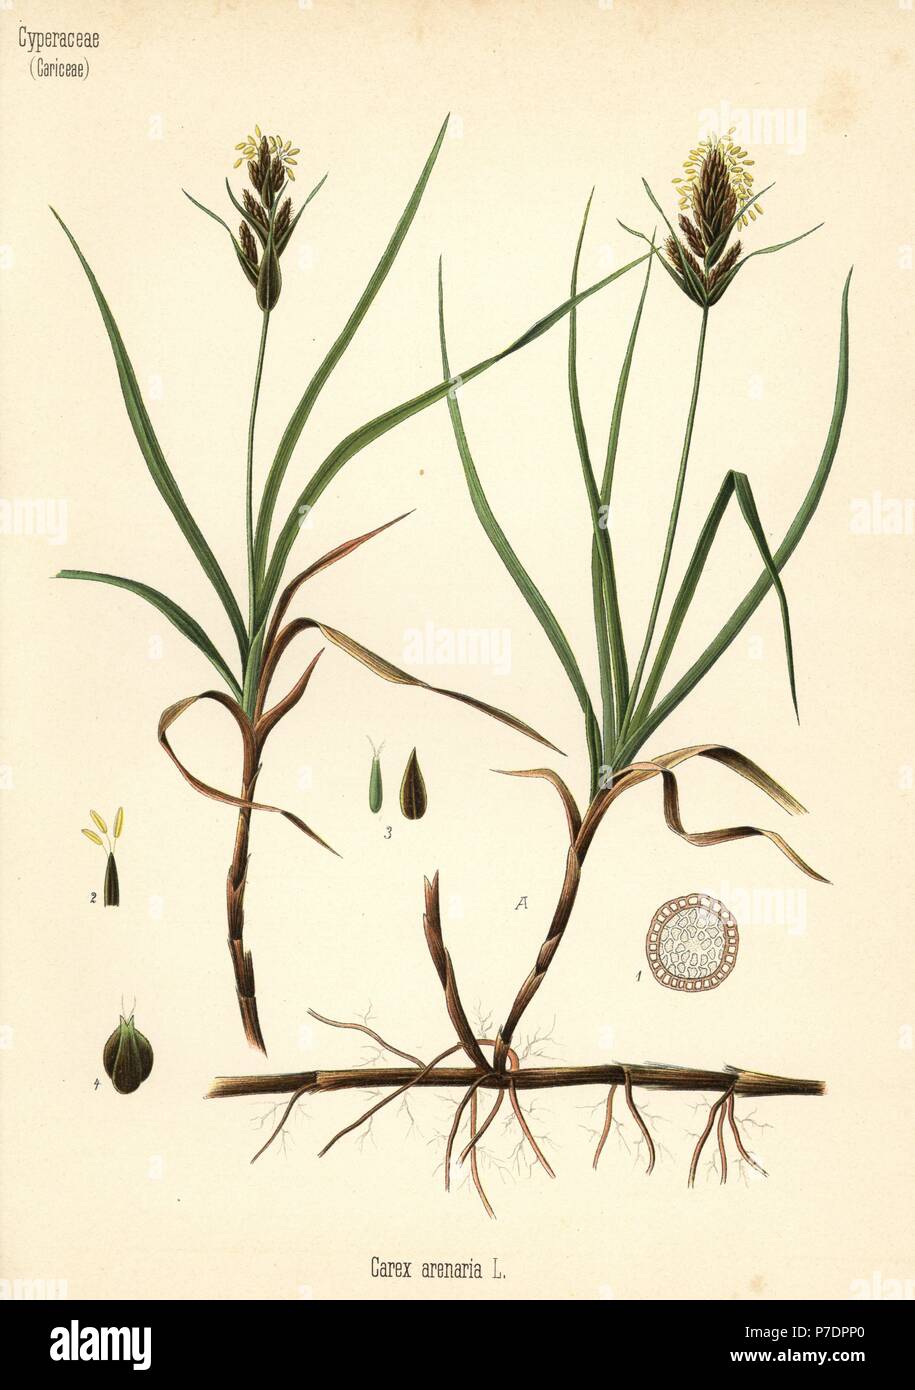 Sand sedge or german sarsaparilla, Carex arenaria. Chromolithograph after a botanical illustration from Hermann Adolph Koehler's Medicinal Plants, edited by Gustav Pabst, Koehler, Germany, 1887. Stock Photo